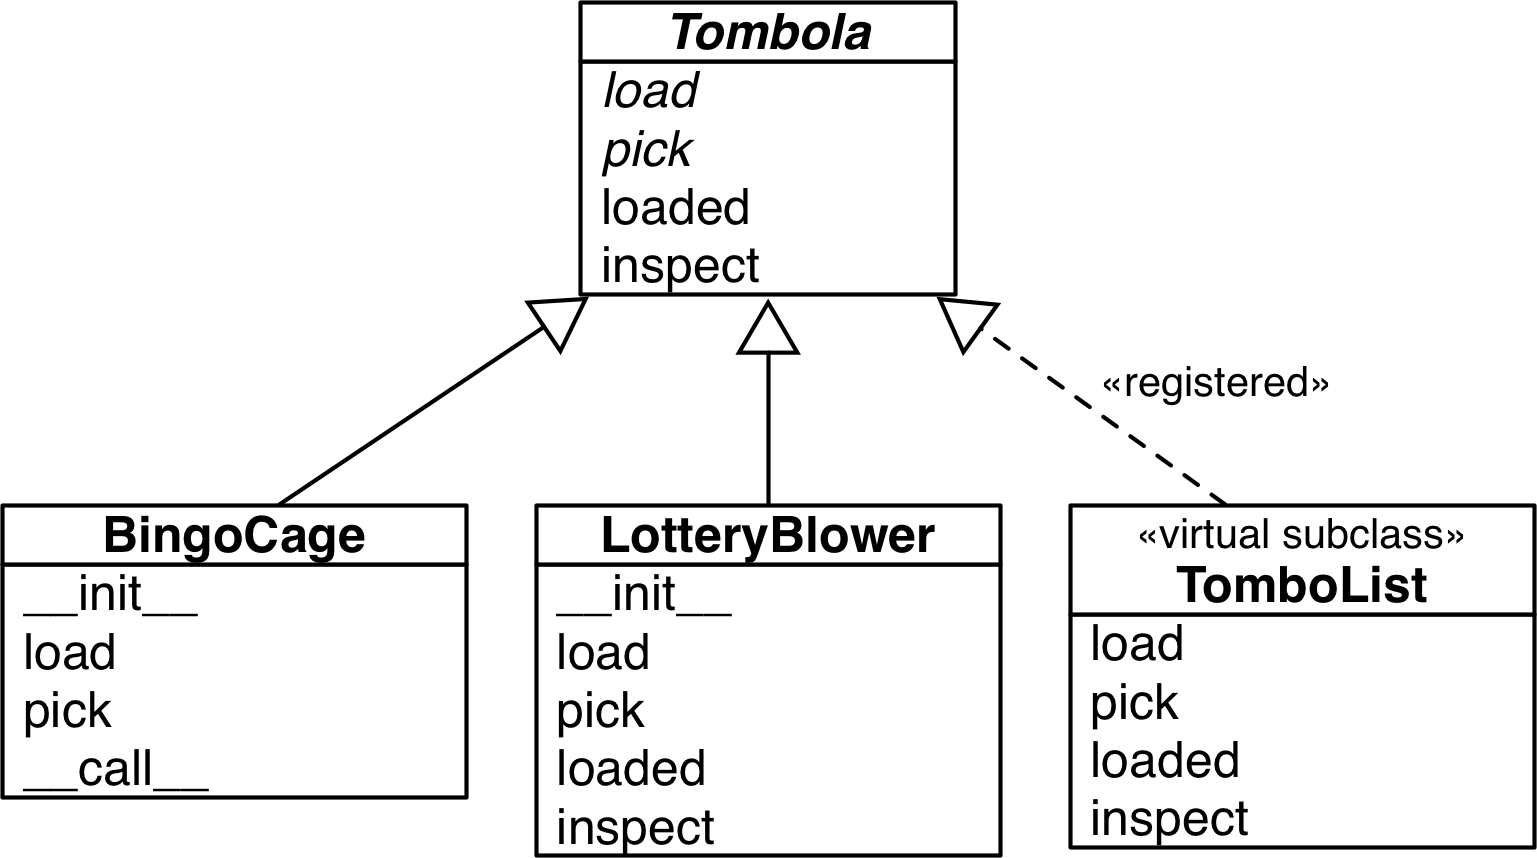 UML for Tombola